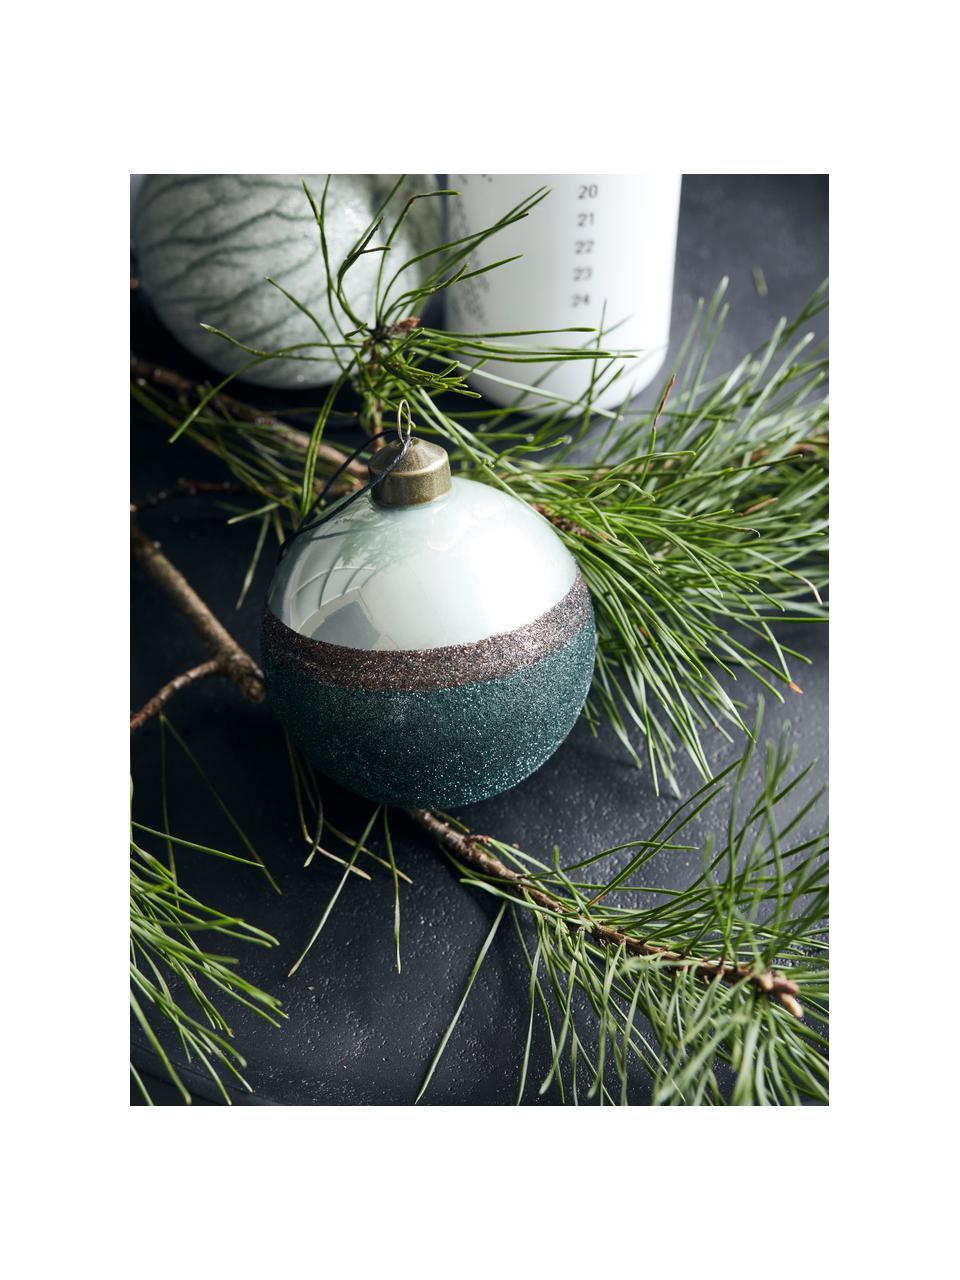 Kerstballen Stripe, 4 stuks, Glas, Mintgroen, bruin, petrol, Ø 8 x H 9 cm